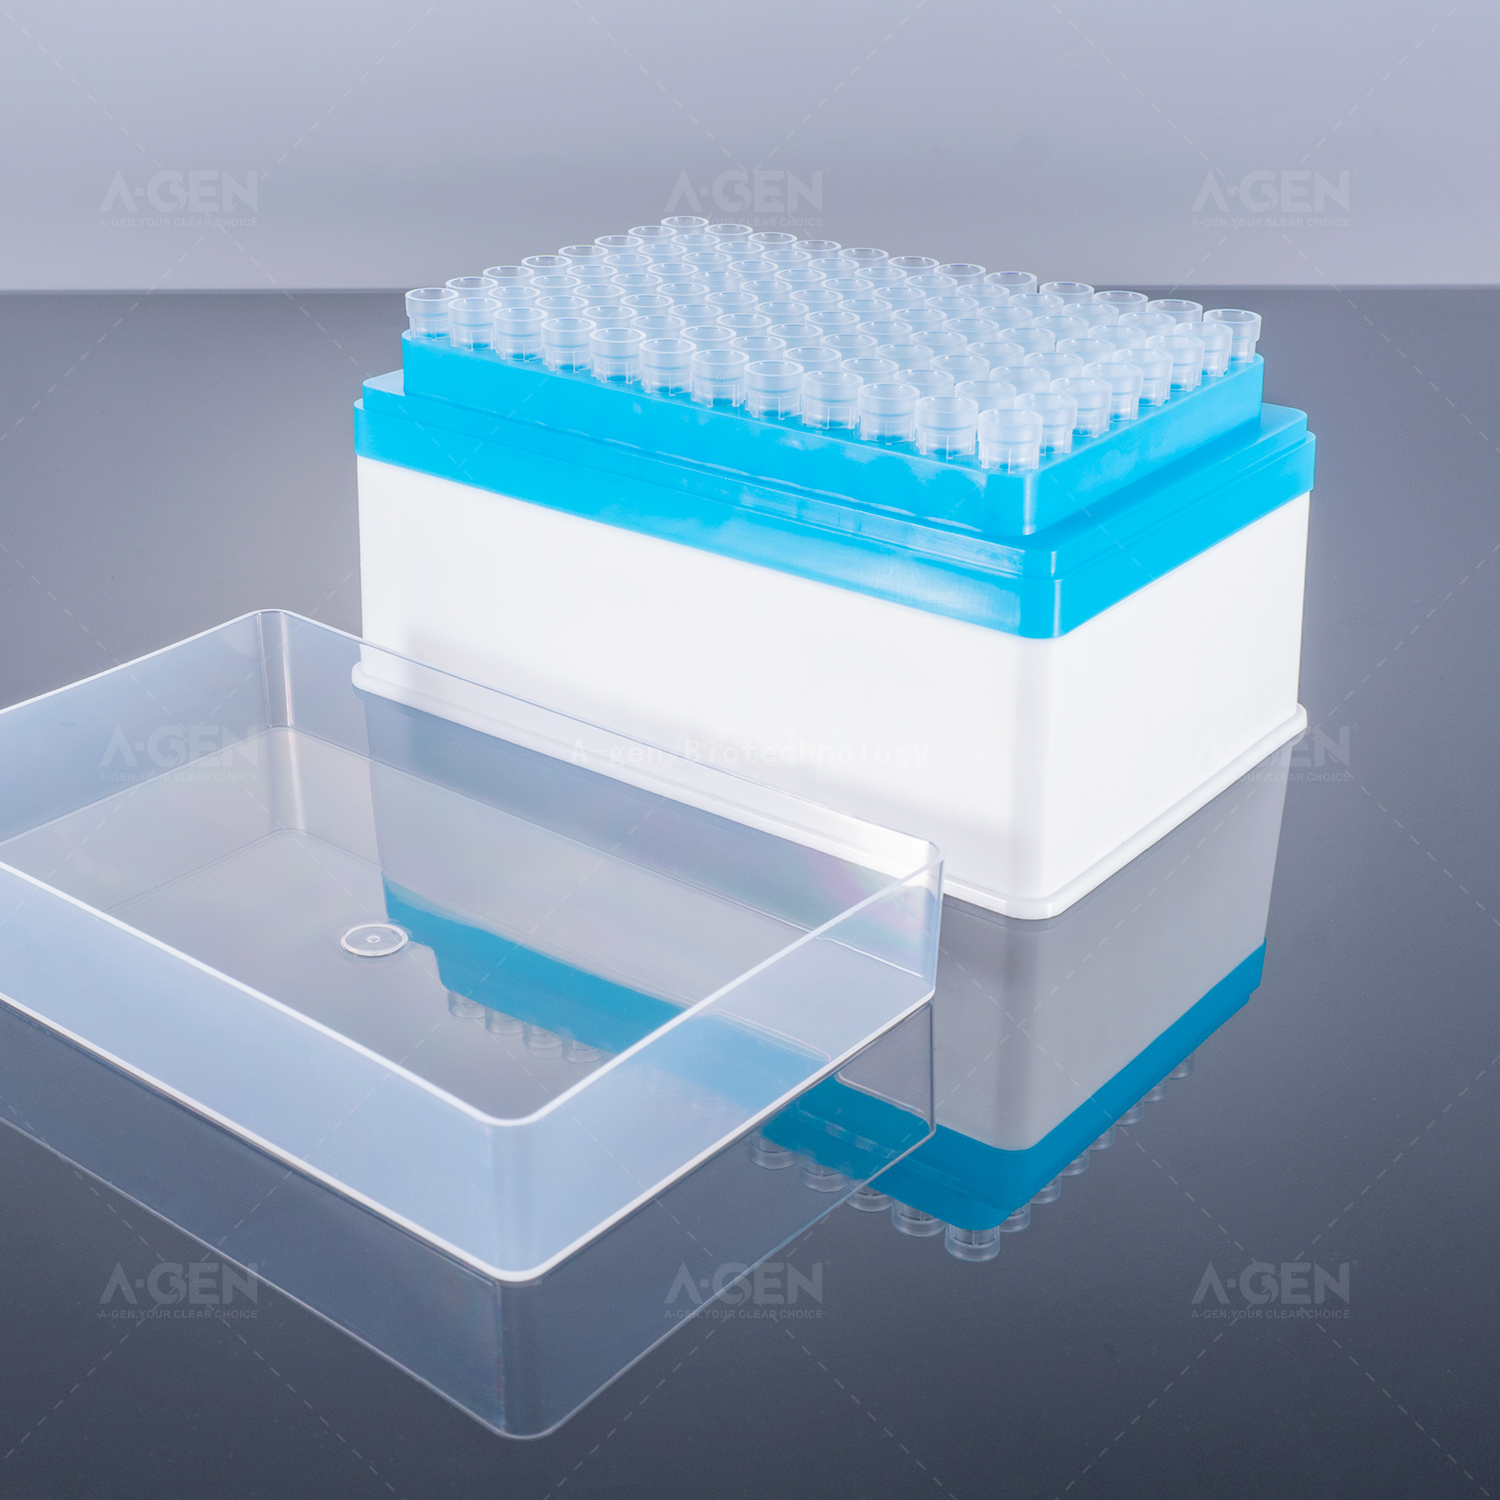 Tecan LiHa 50μL Transparent PP Pipette Tip (SBS Racked,sterilized) for Liquid Transfer No Filter TT-50-HSL Low Retention